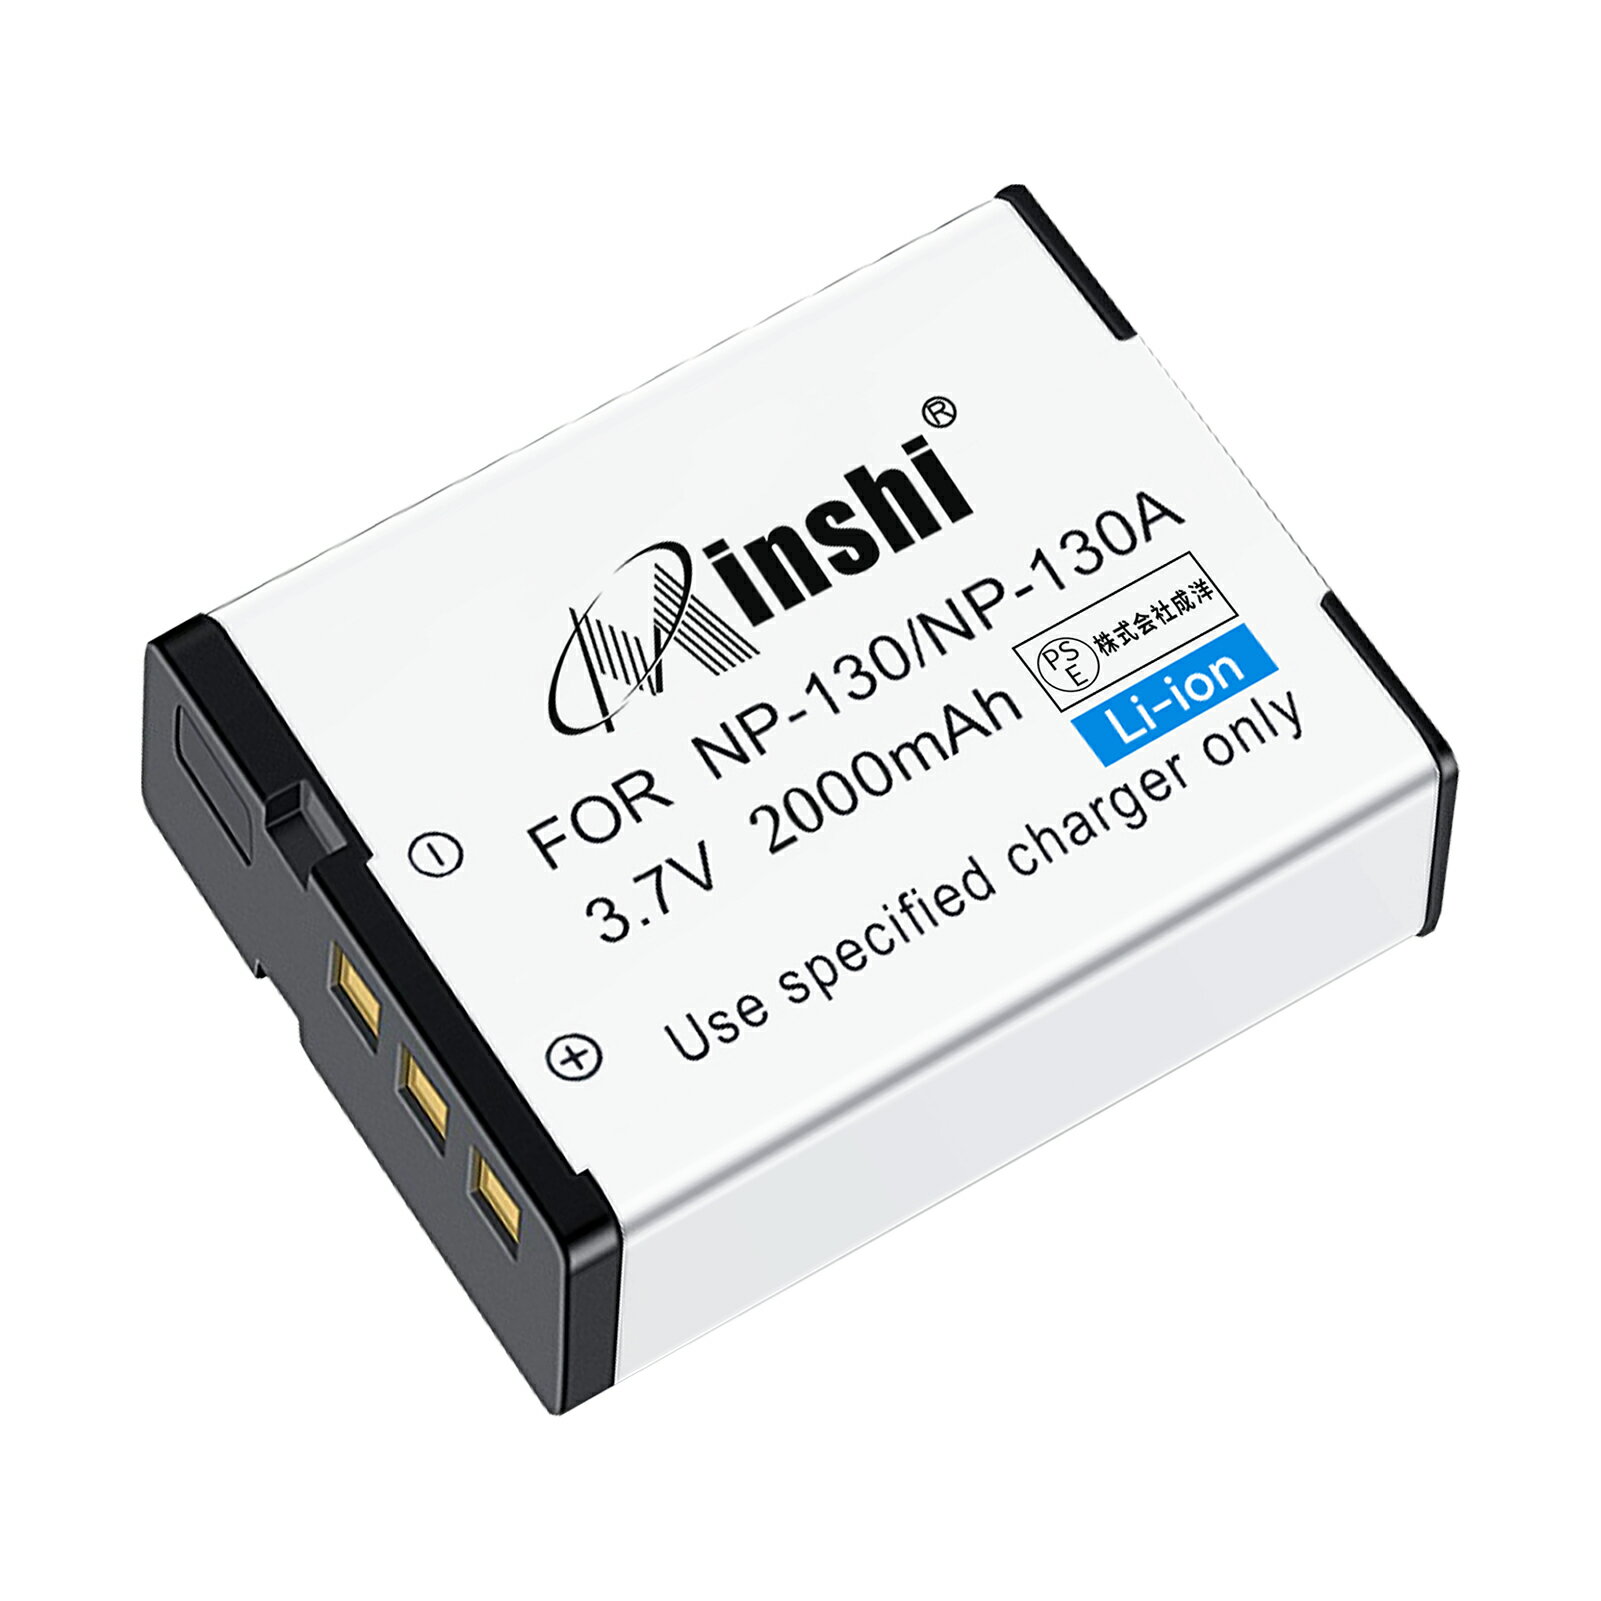 minshi 新品 Casio EX-ZR300 互換バッテリー 2000mAh XAB 高品質交換用リチャージブル カメラバッテリー リチウムイオンバッテリー デジタルカメラ デジカメ 充電池 PSE認証 1年間保証 予備バッテリー